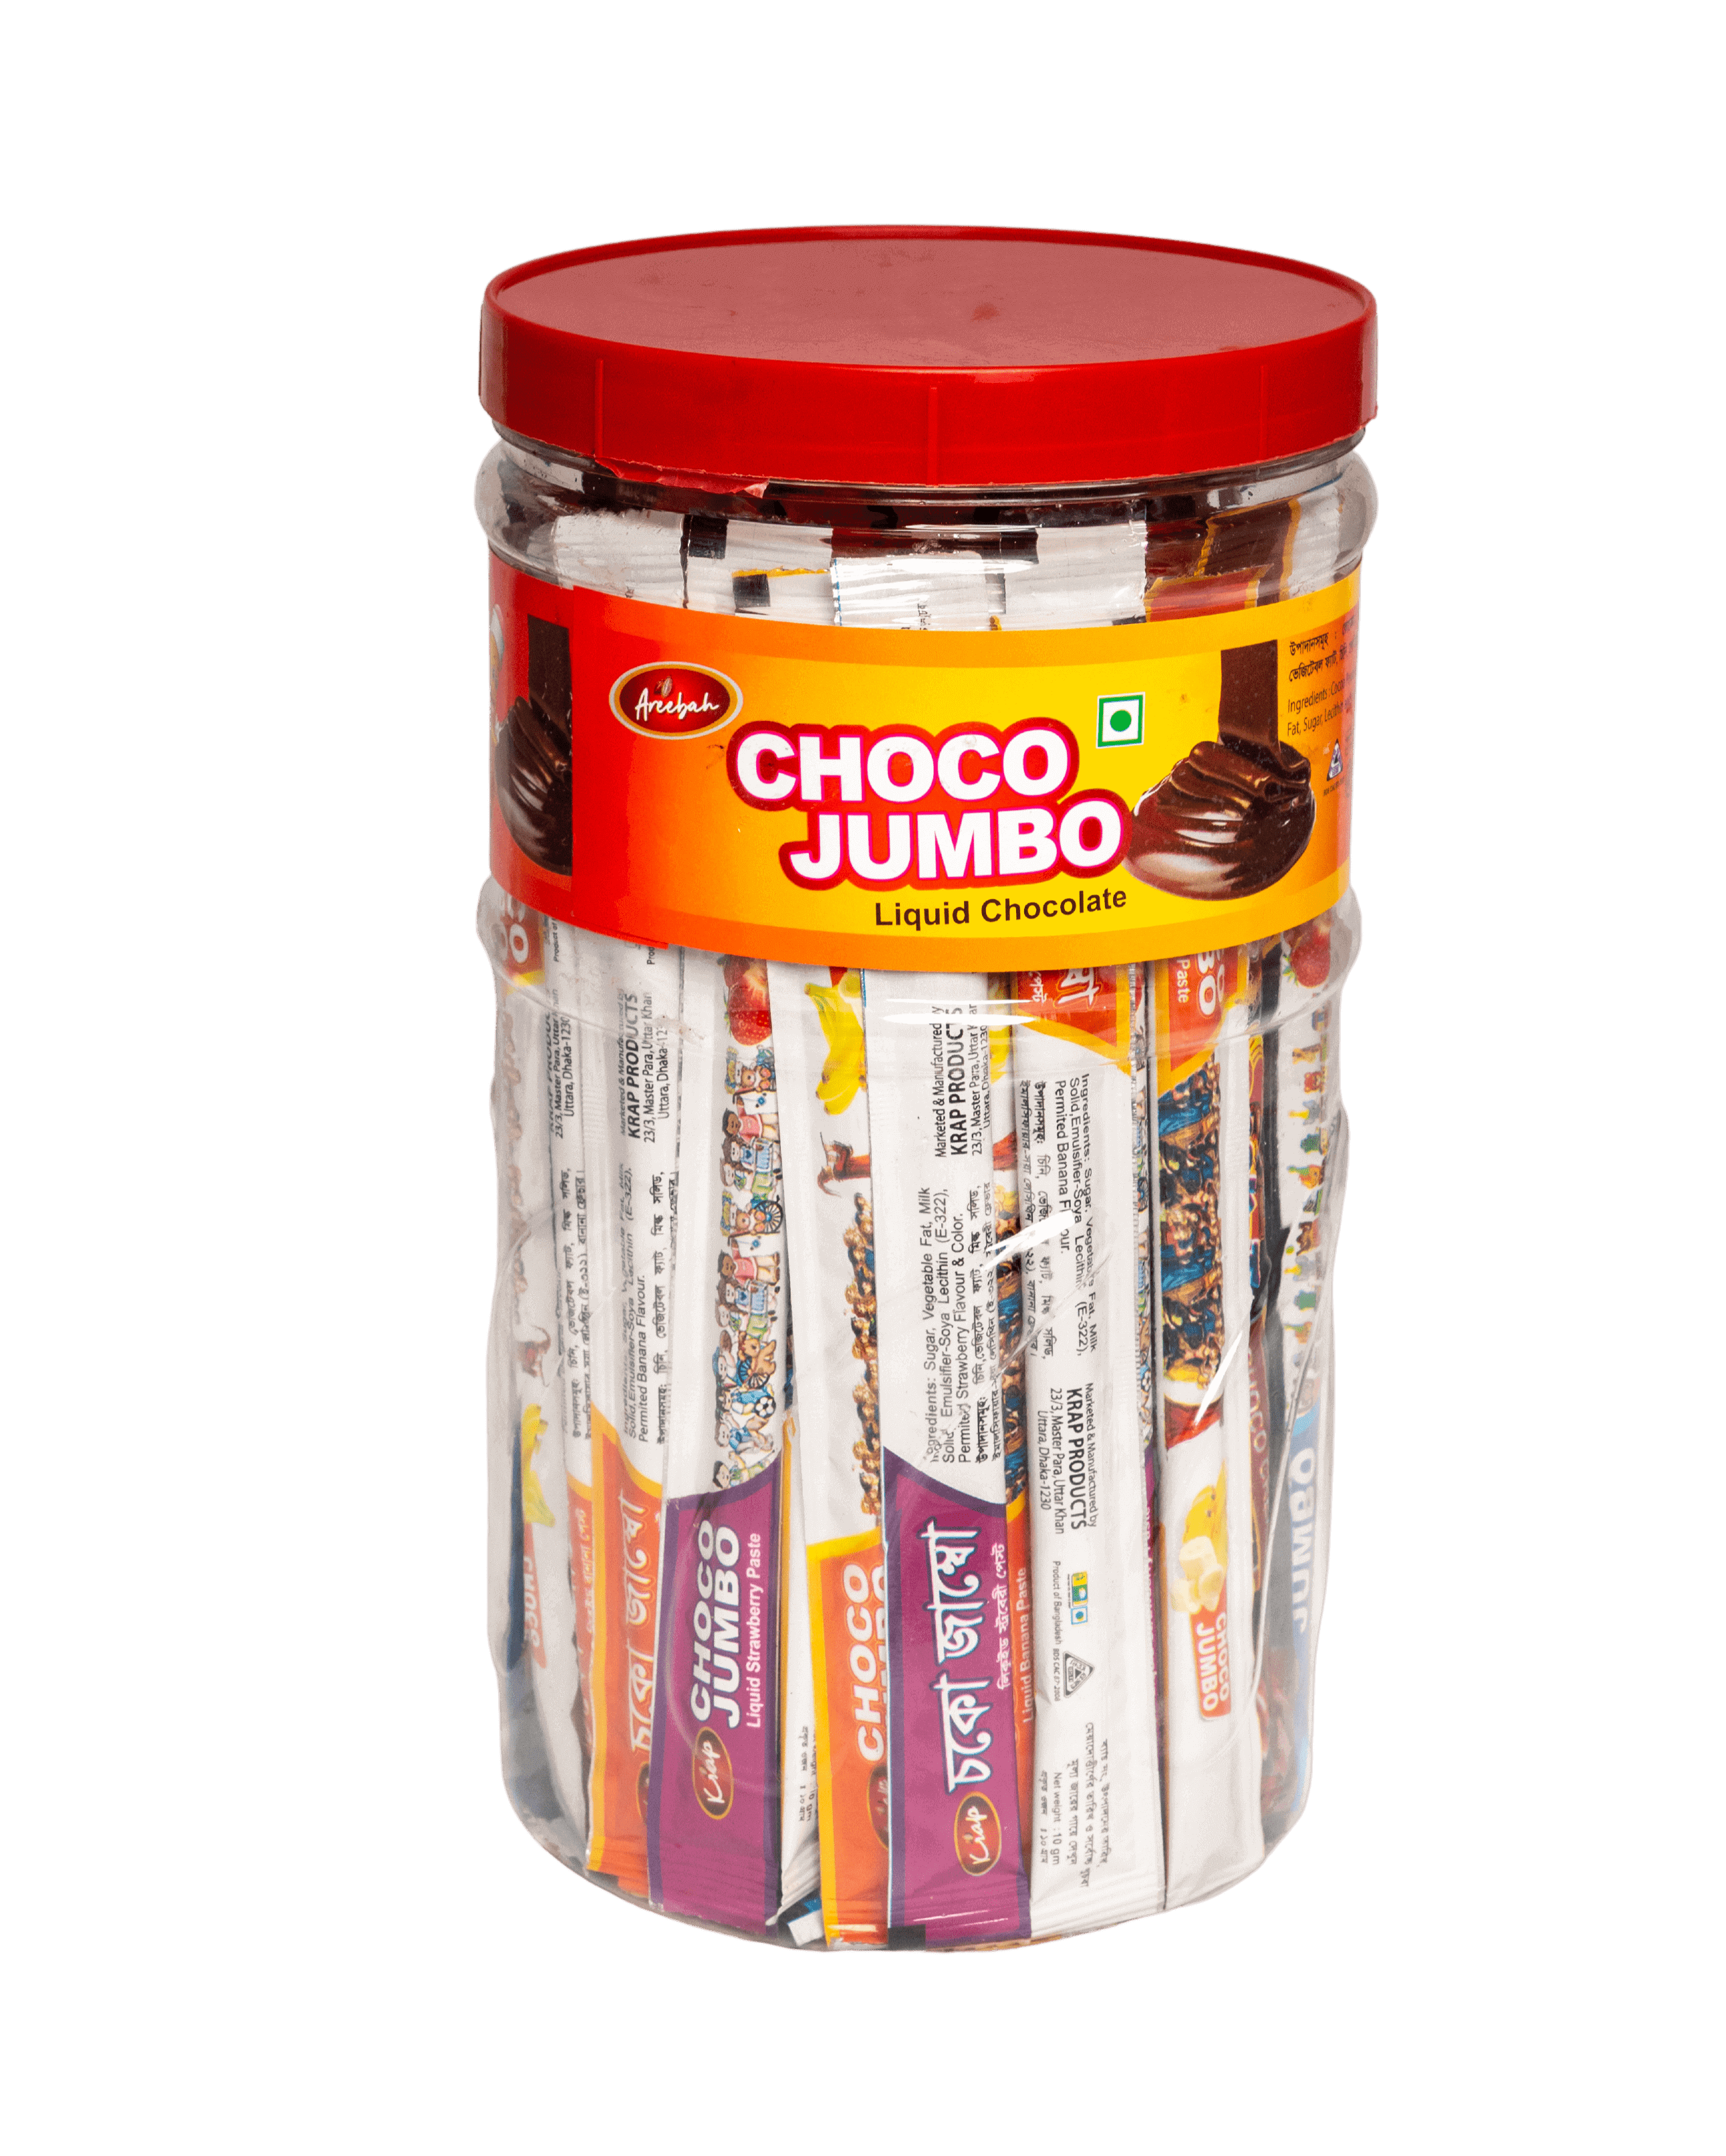 Areebah Choco Jumbo - Liquid Chocolate